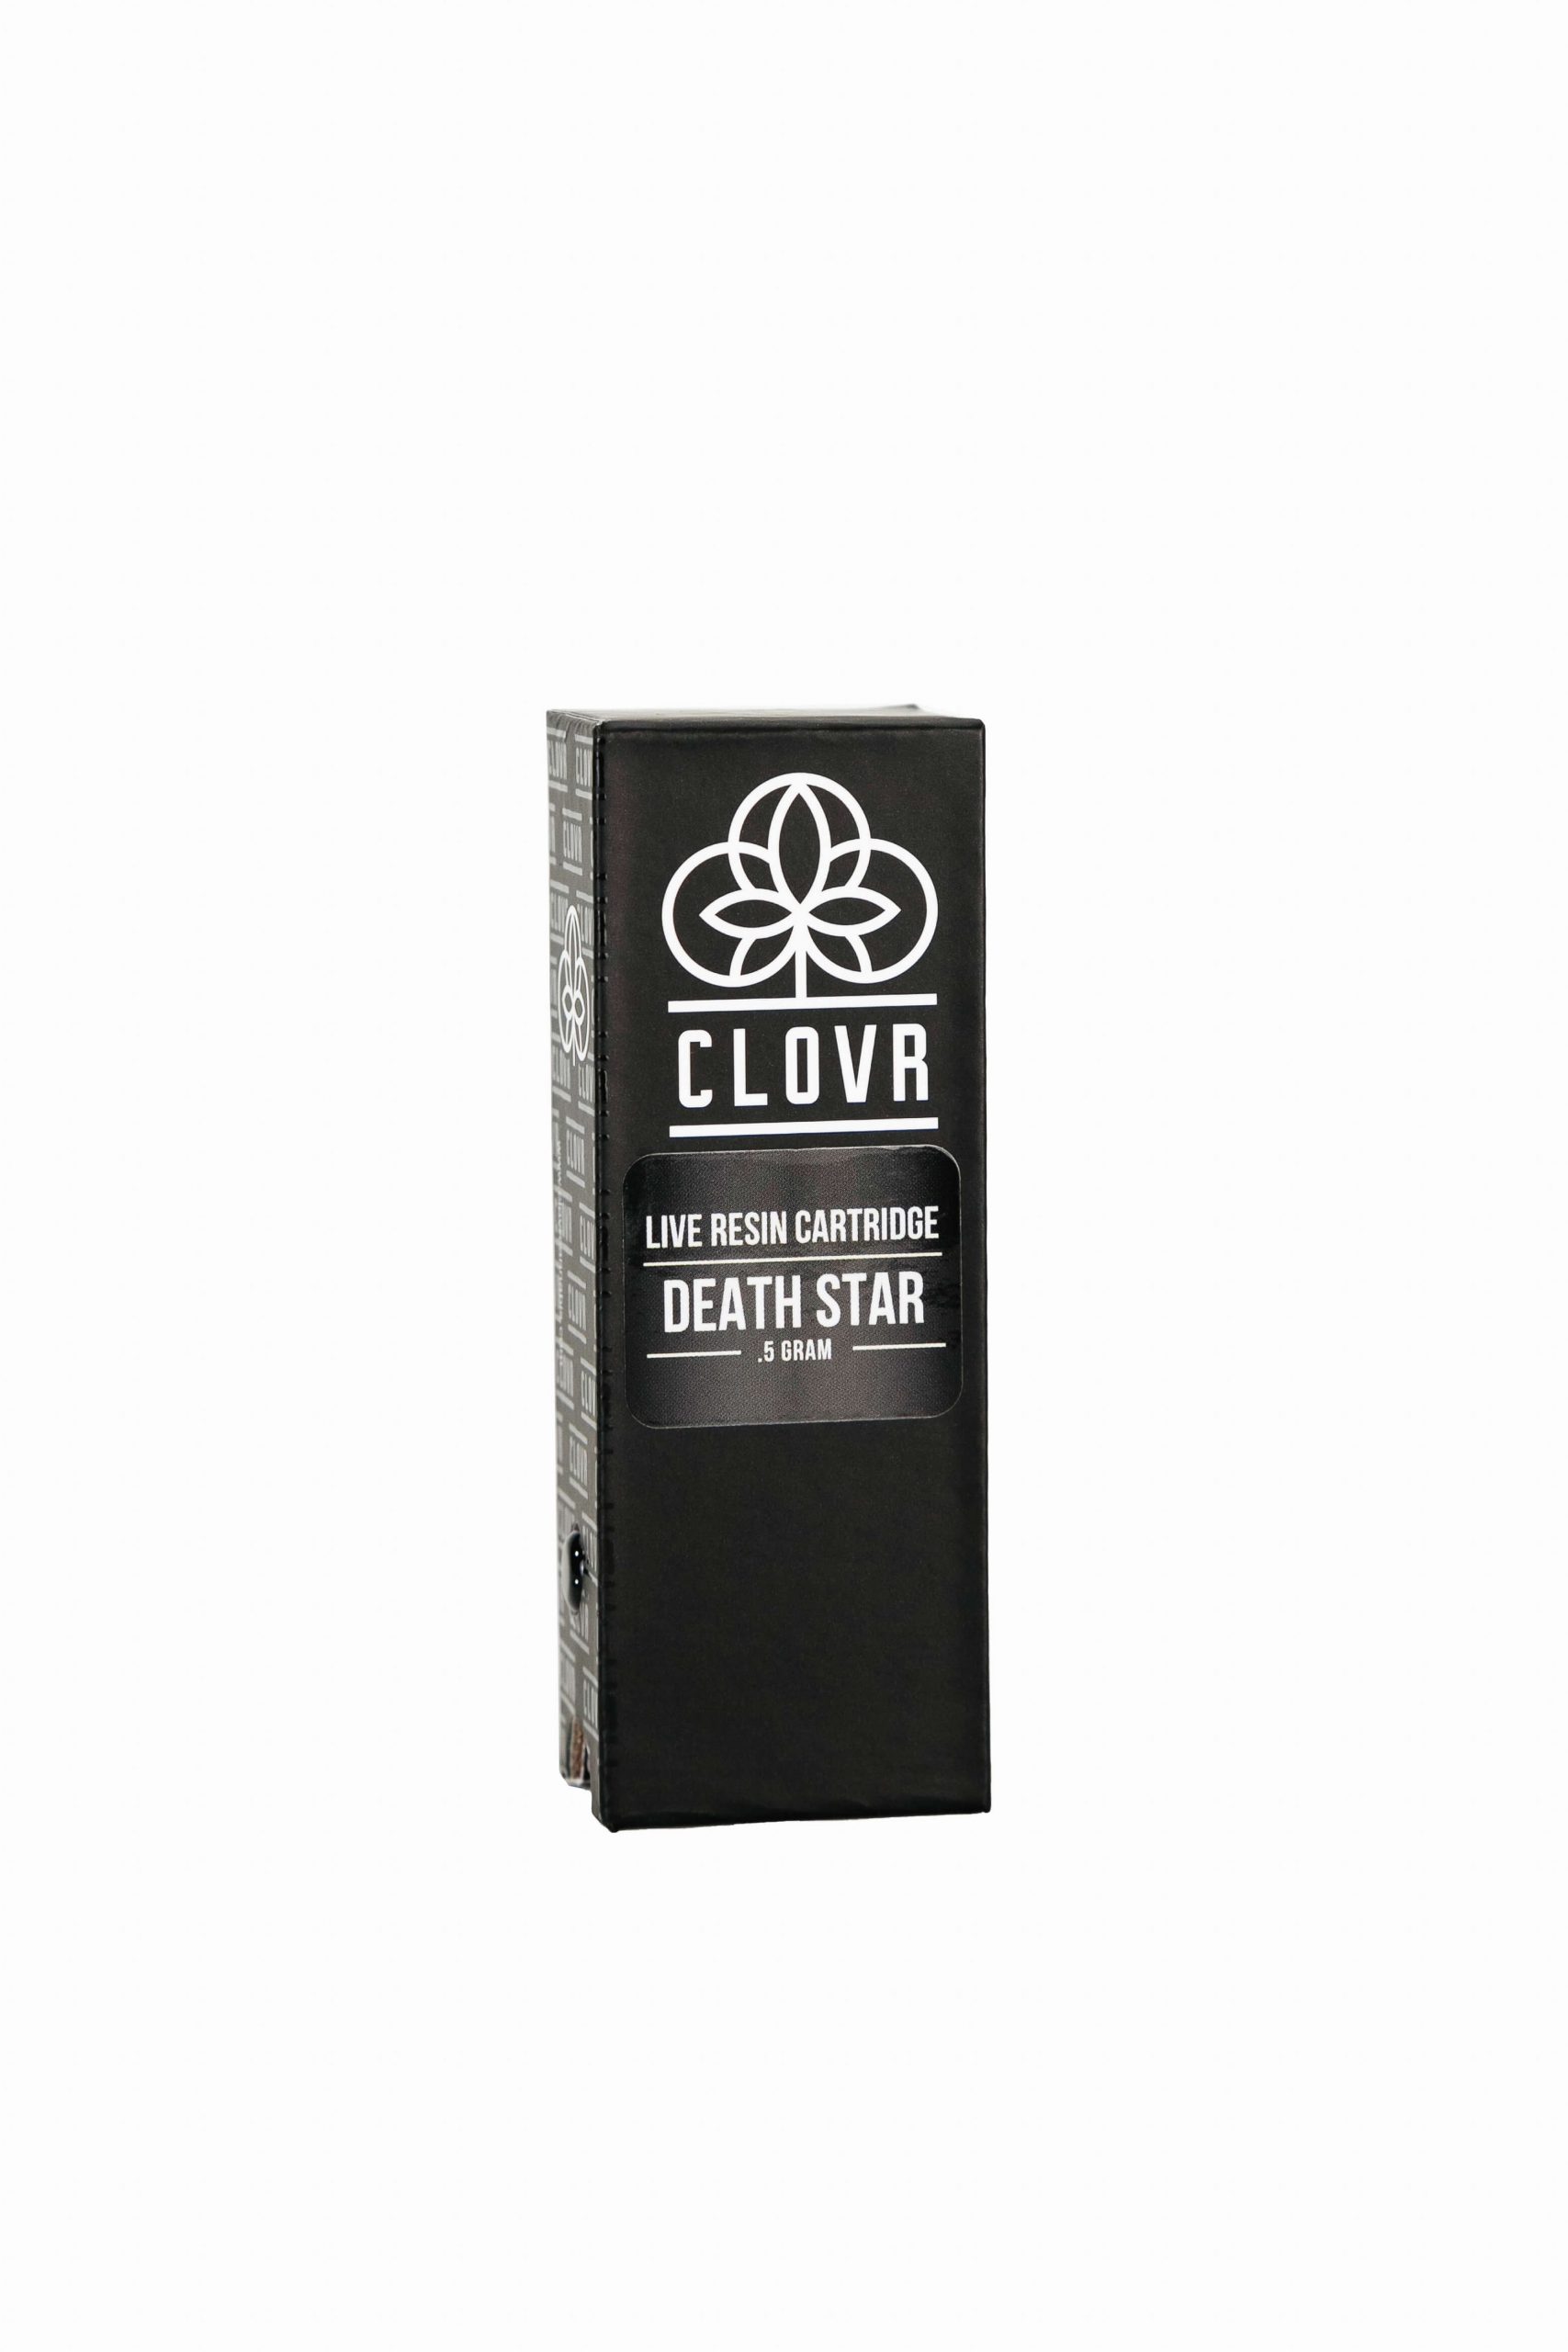 clovr marijuana live resin cartridge death star packaging